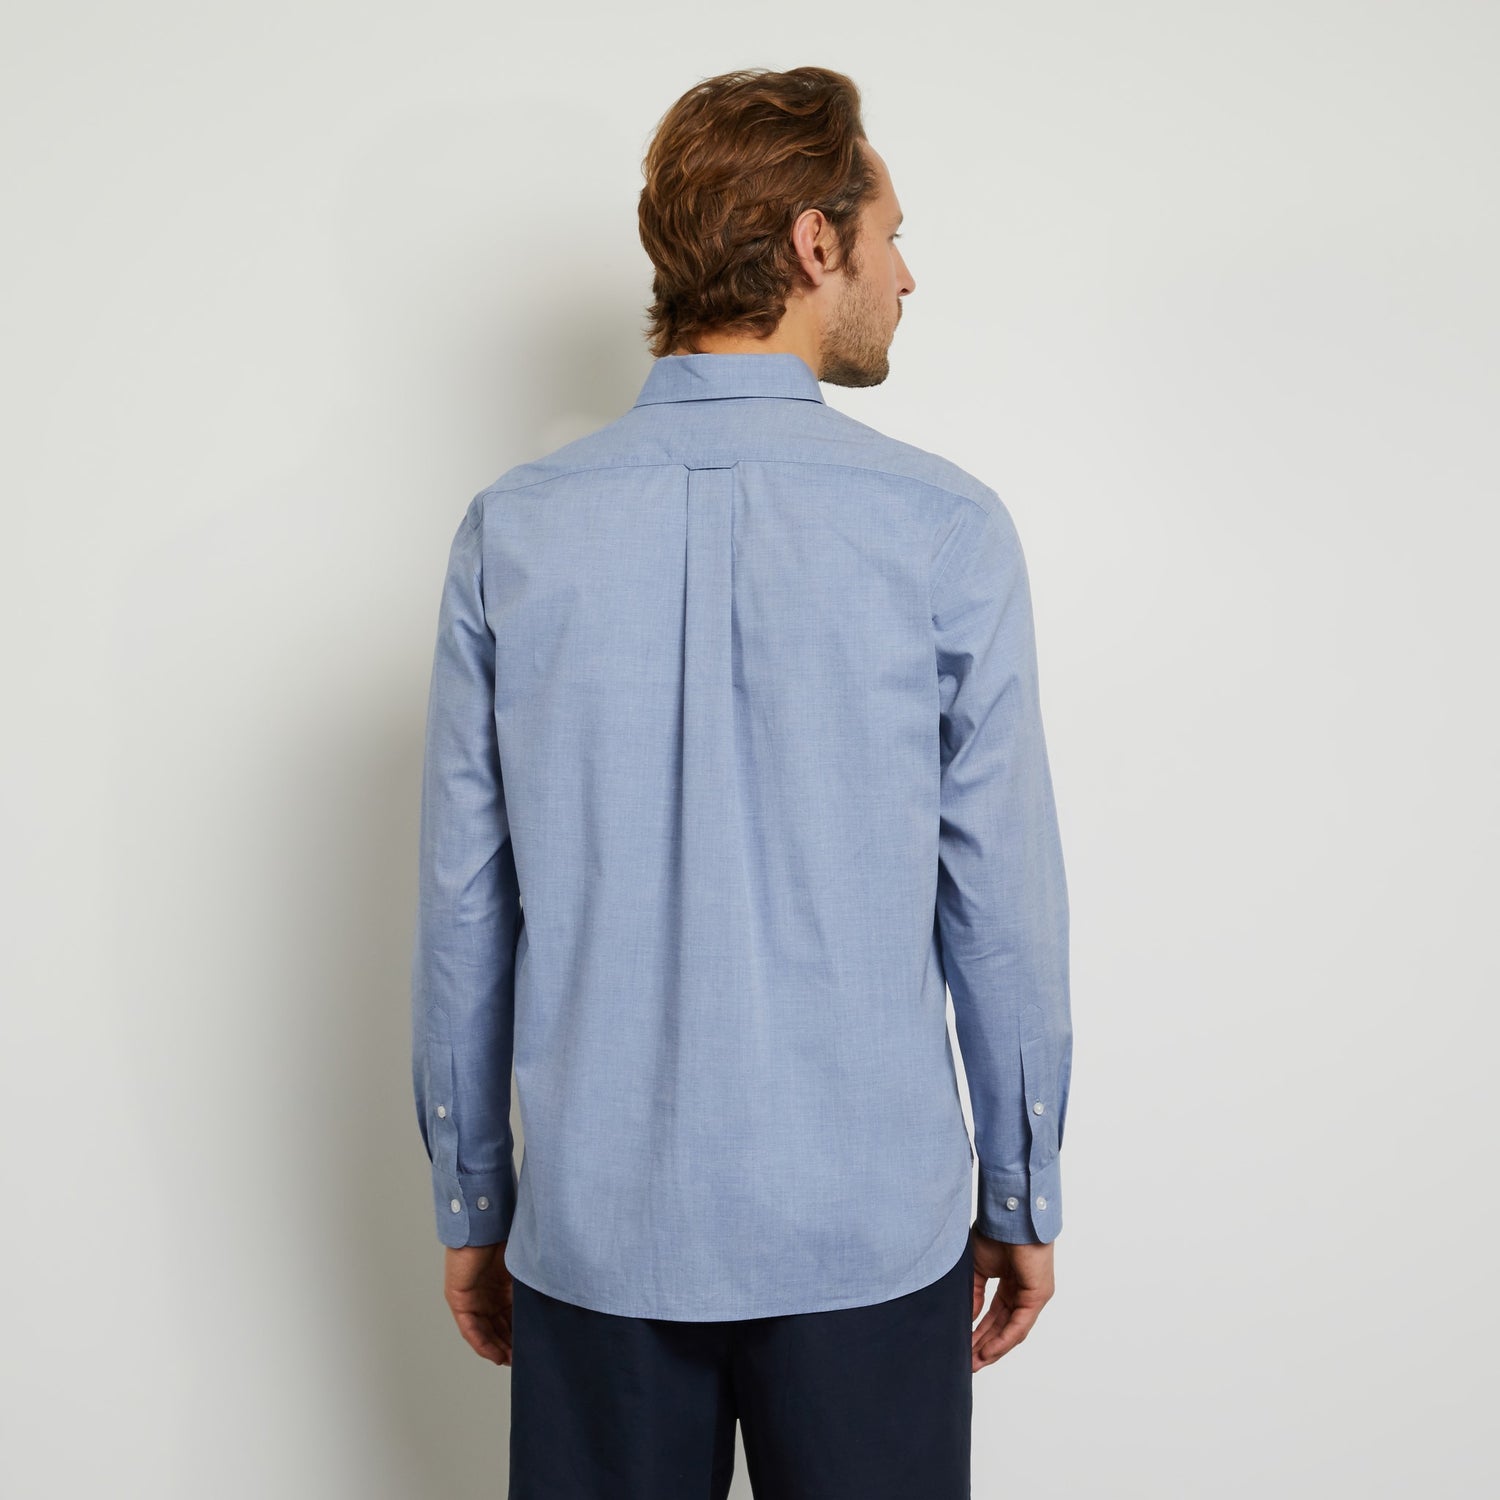 Blue Shirt In Zephyr Cotton - 03